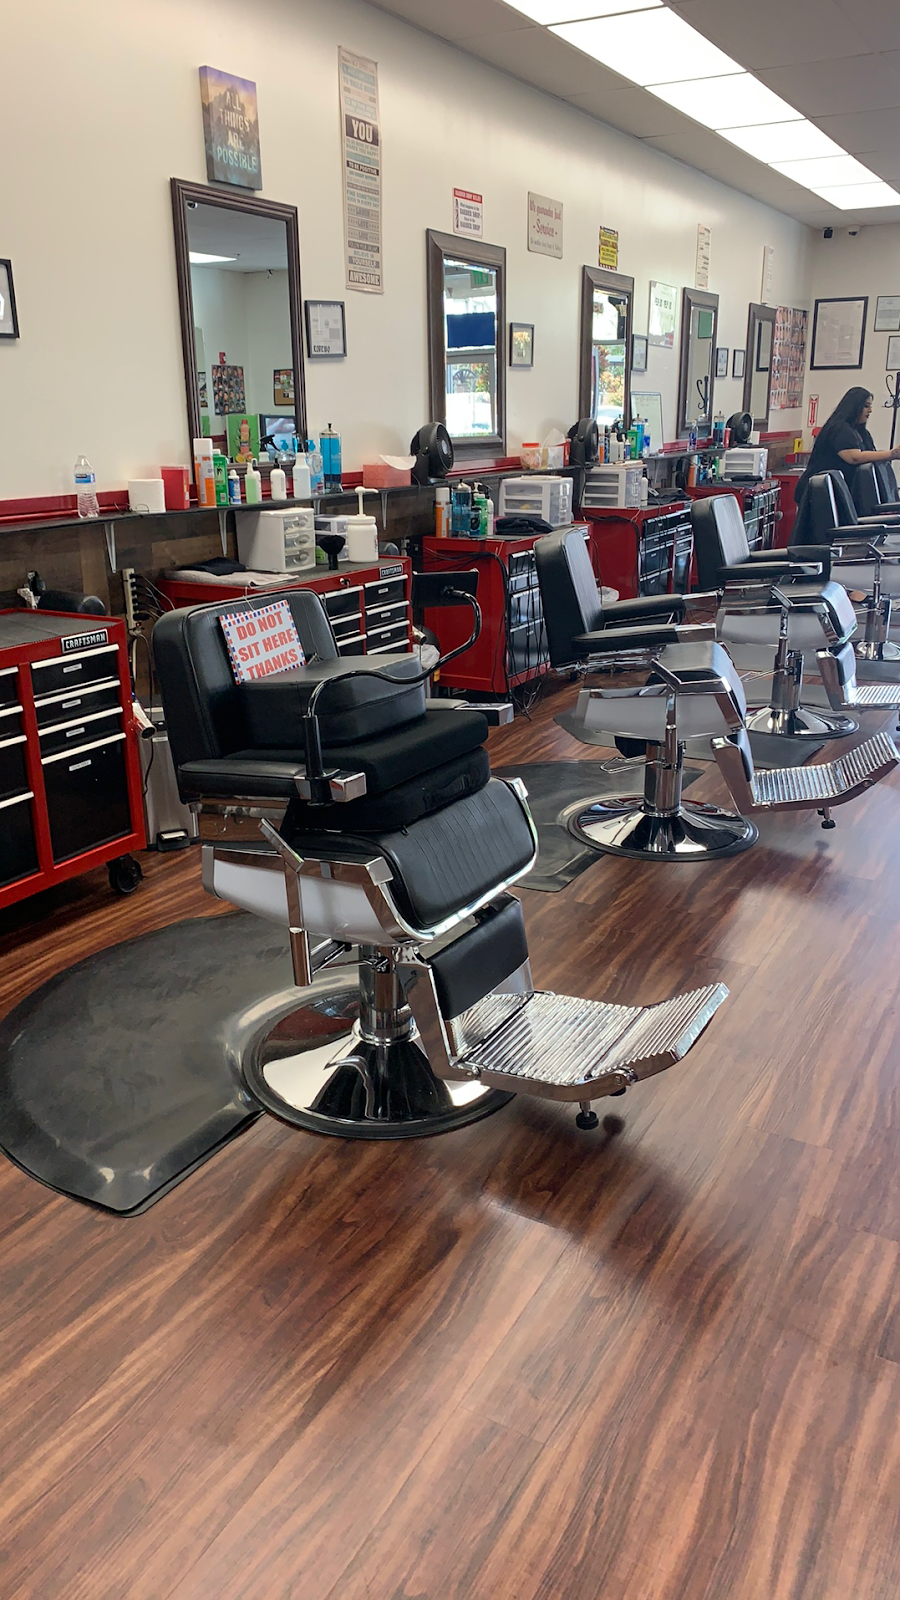 OSCAR’S barber shop | 326 E Holt Blvd, Ontario, CA 91761, USA | Phone: (323) 599-3451